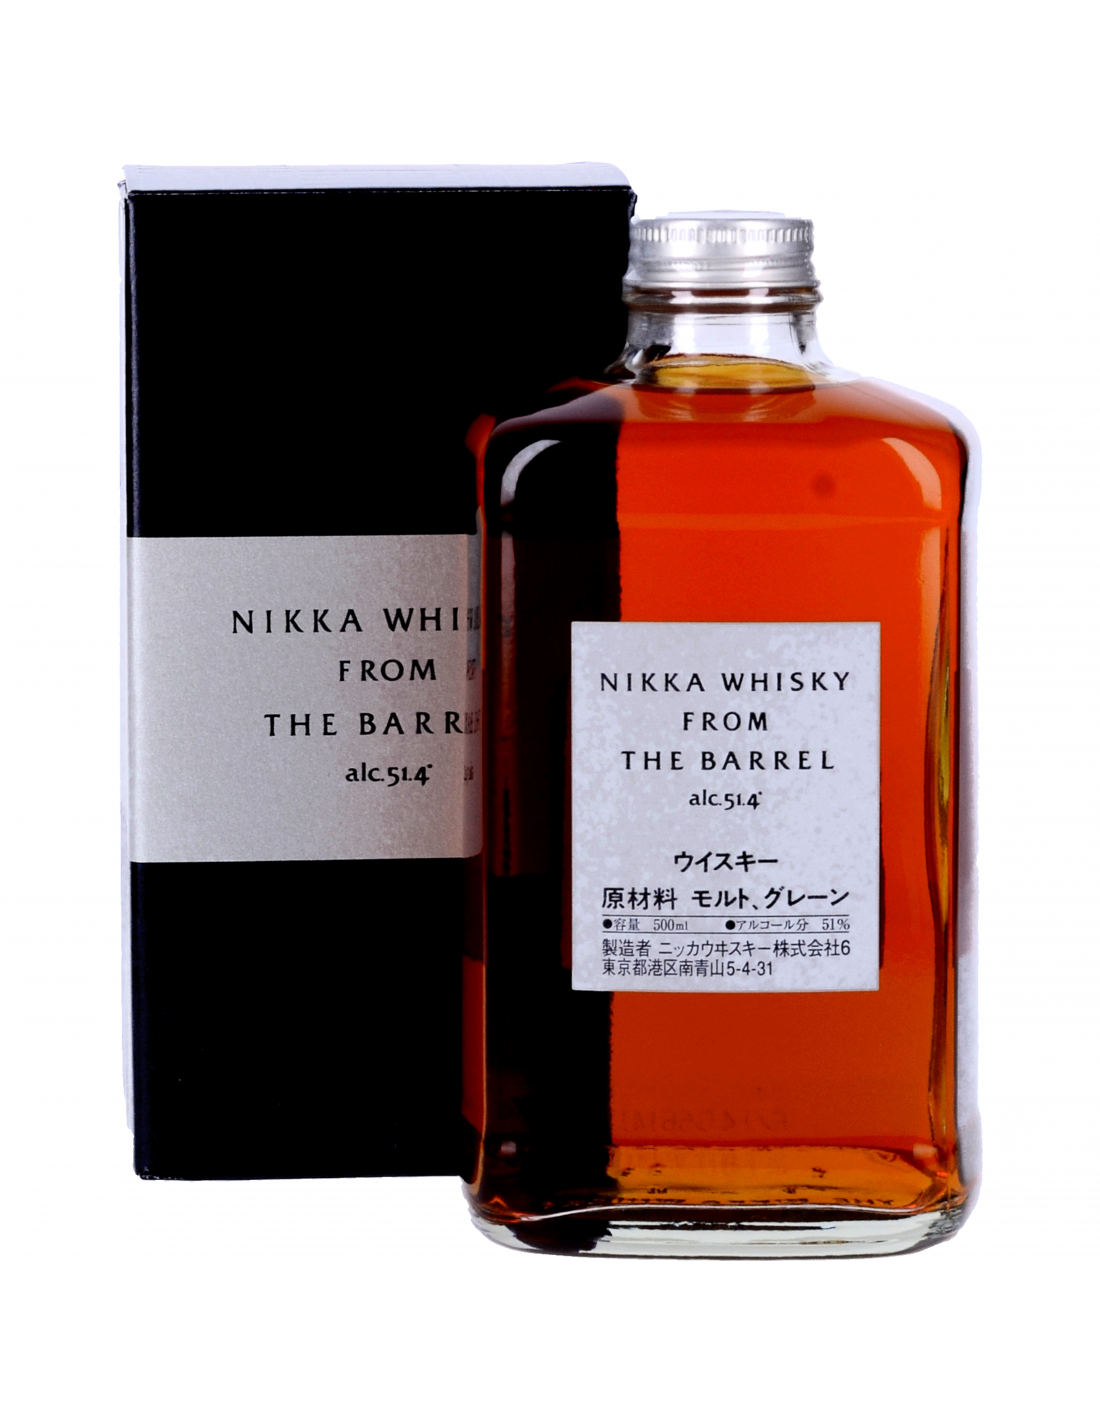 Nikka From The Barrel Whisky 51°4 Etui - Nikka - Japonais Whiskies